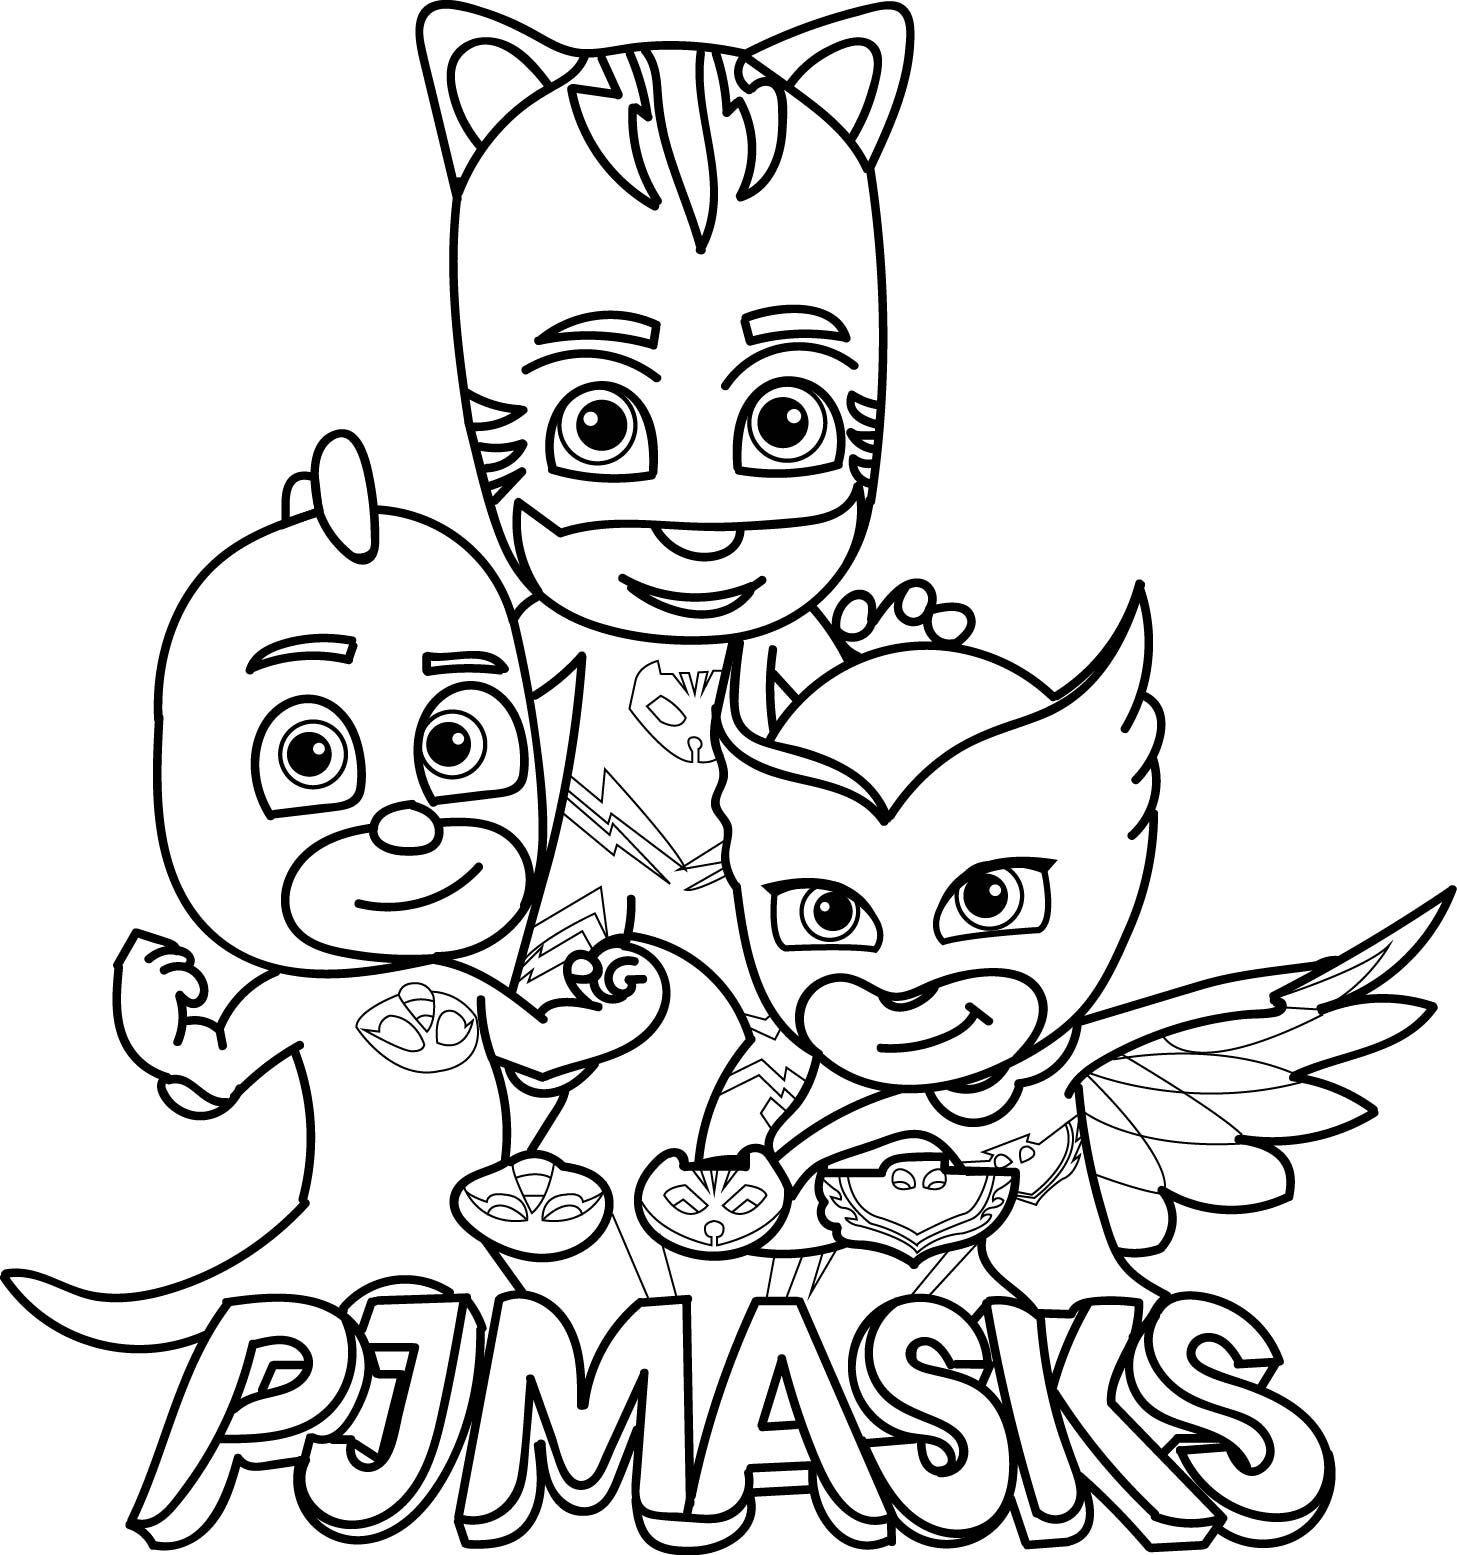 Free Coloring Sheets For Boys Pj Mask
 Pj Masks Coloring Page